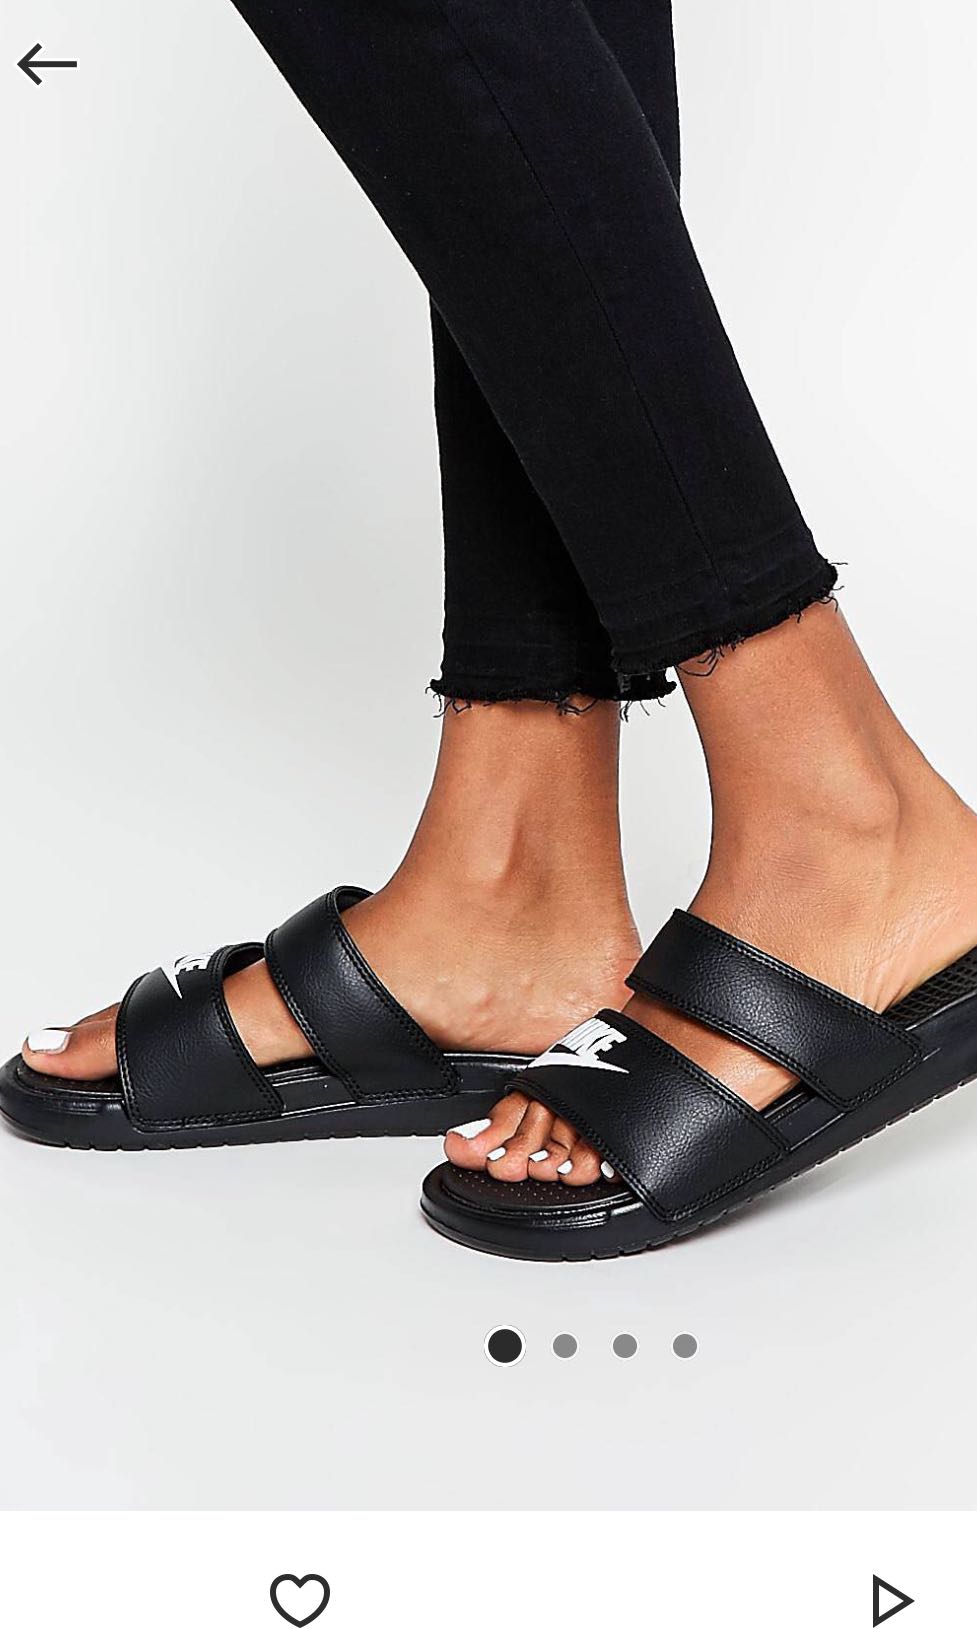 Nike Benassi Duo Flats Sandals, Women's 